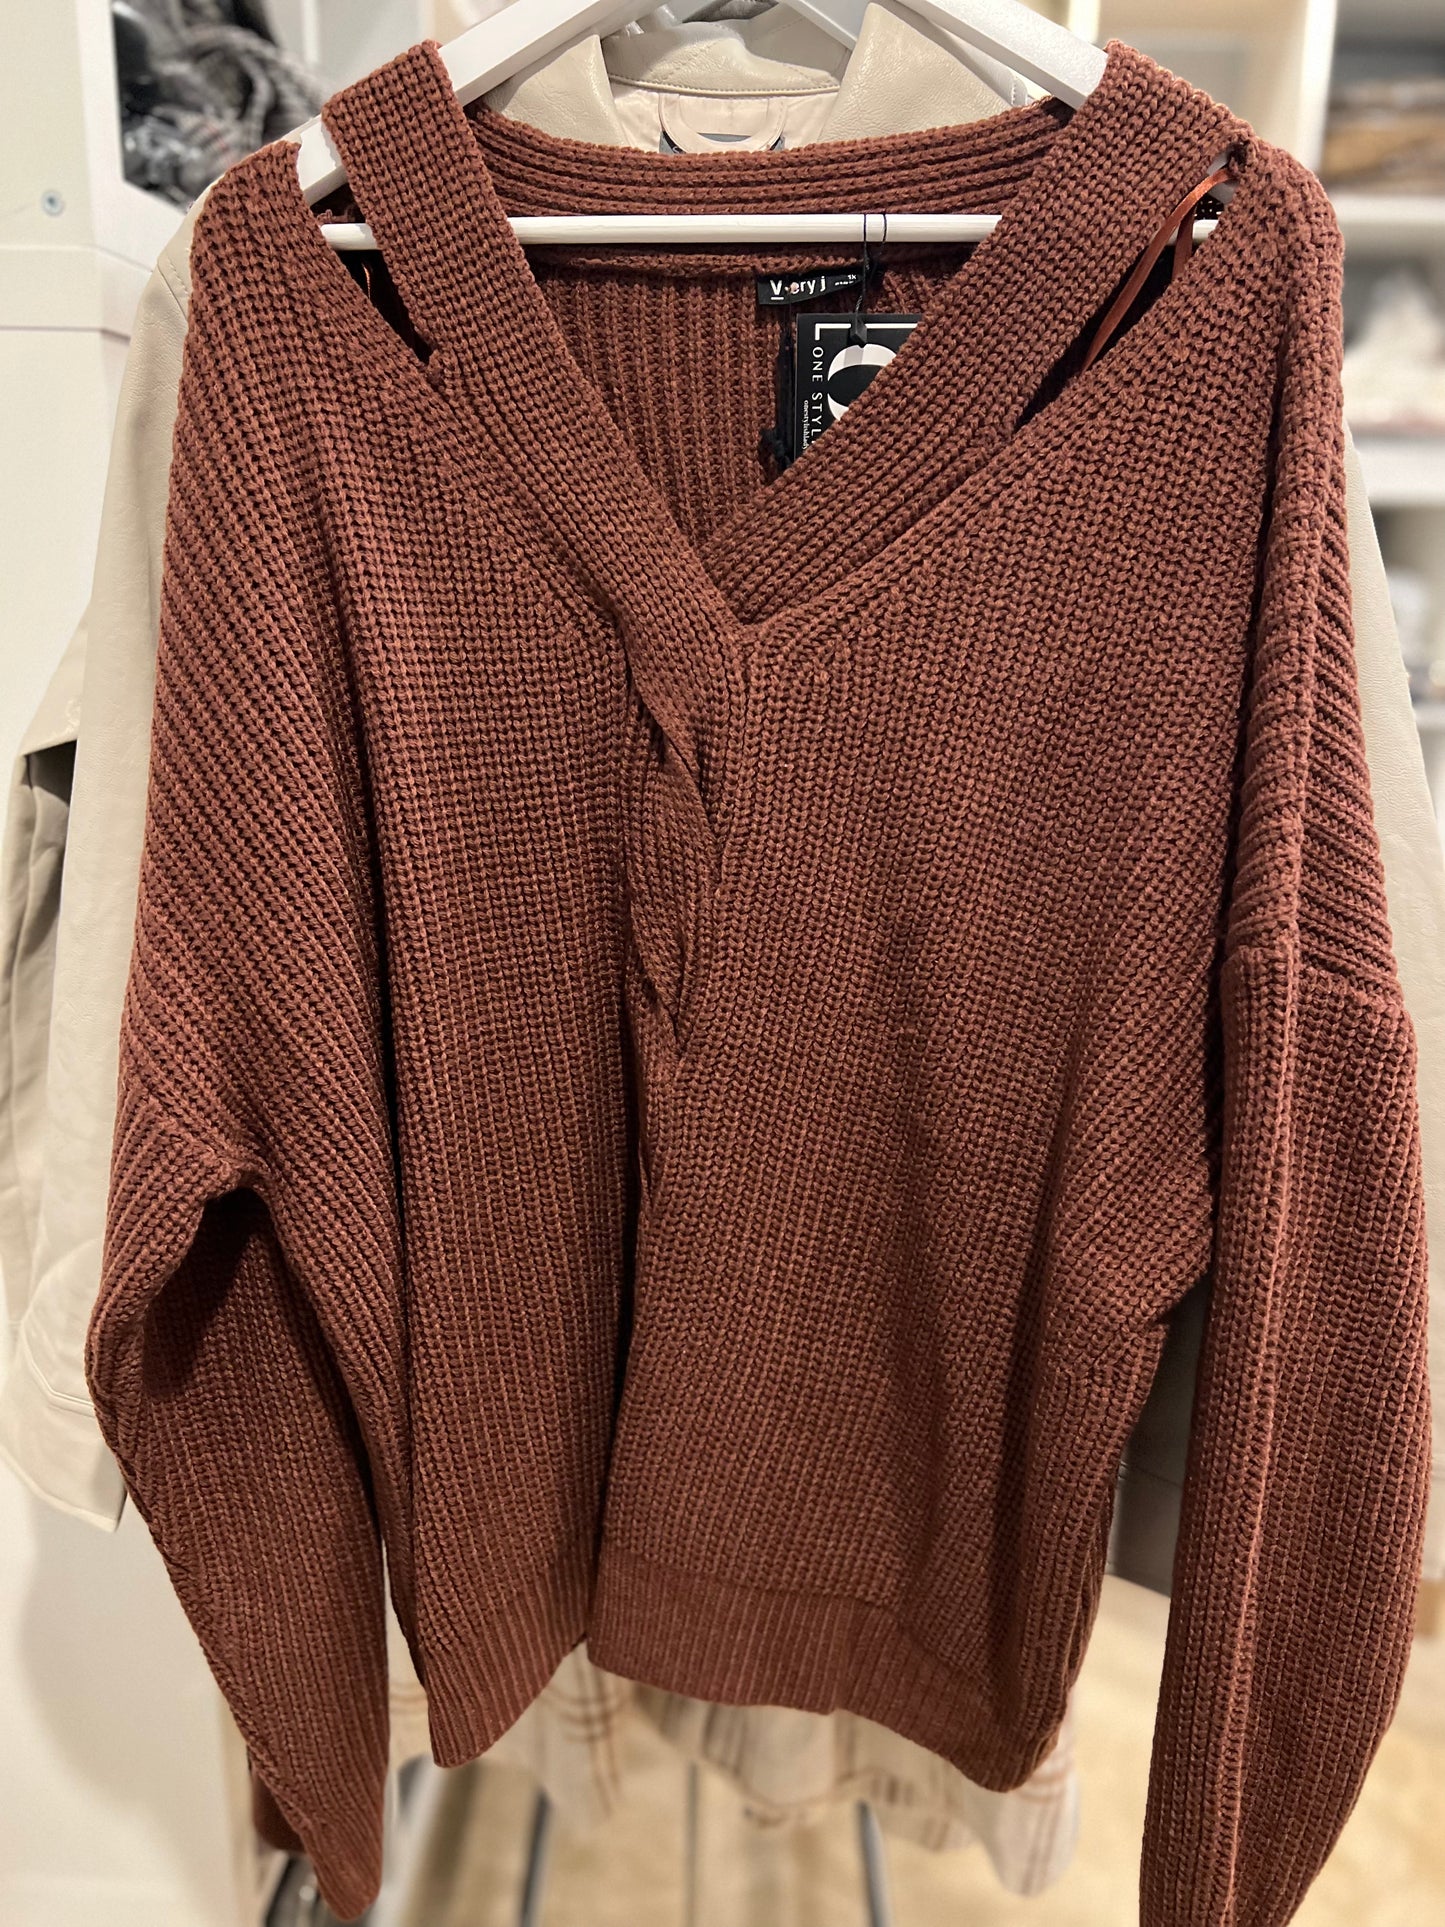 Monet Cutout Sweater - Plus